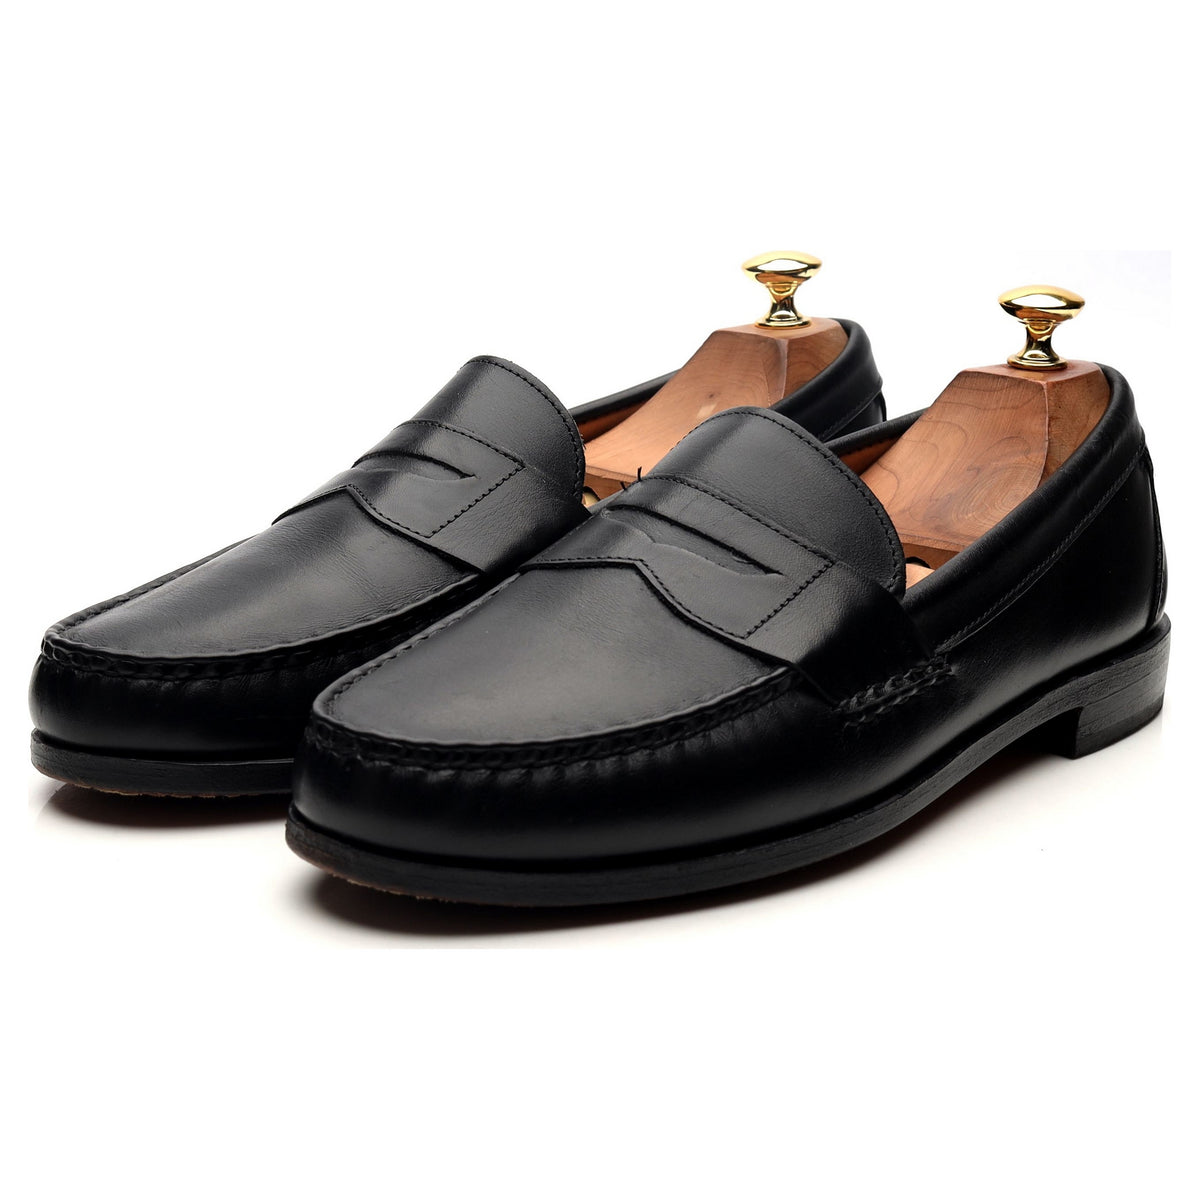 Black Leather Loafers UK 10 US 10.5